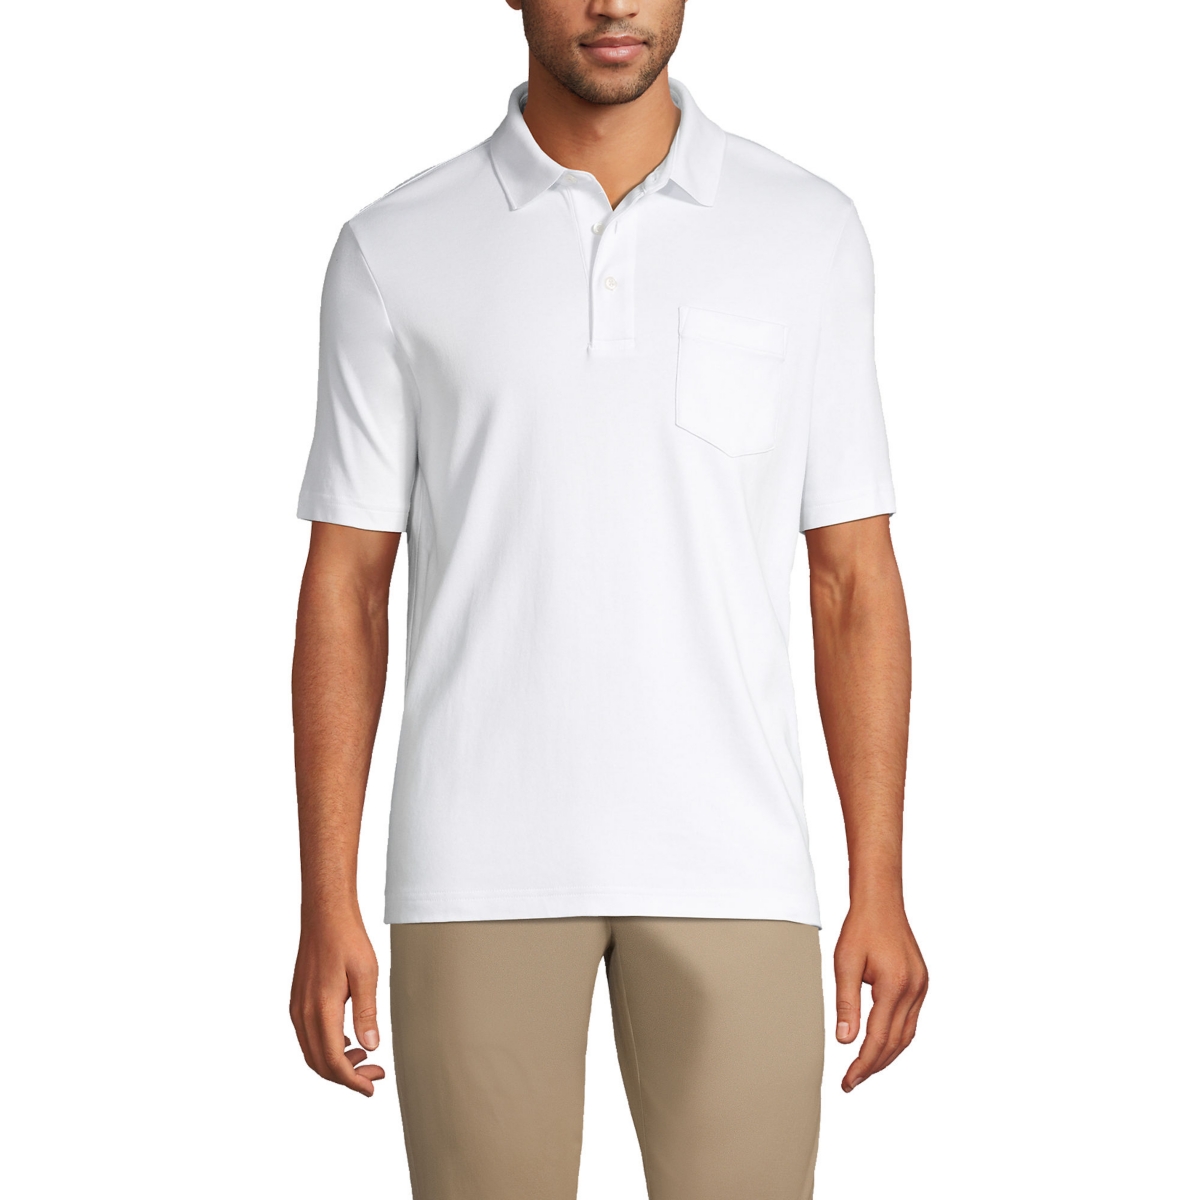 Men's Short Sleeve Cotton Supima Polo Shirt with Pocket - White